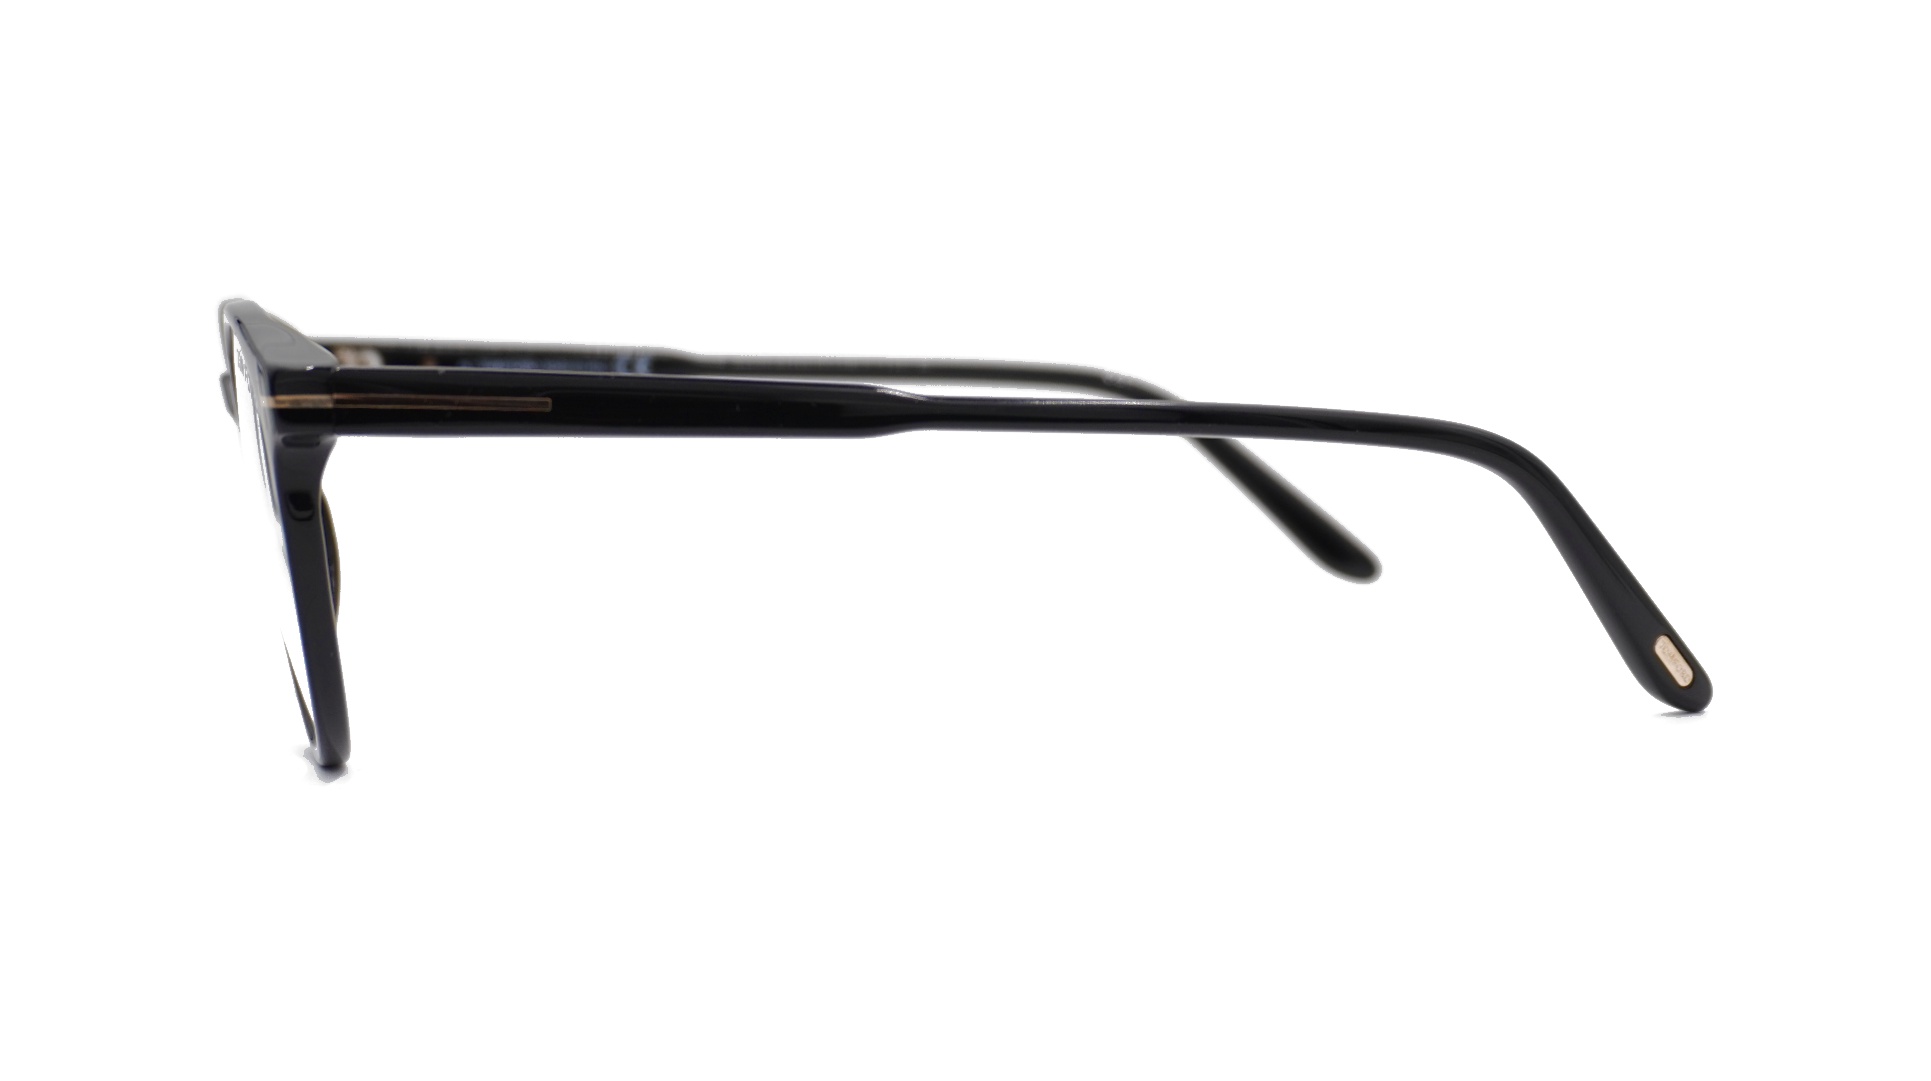 Glasses Tom-ford Tf5695-b, black colour - Doyle